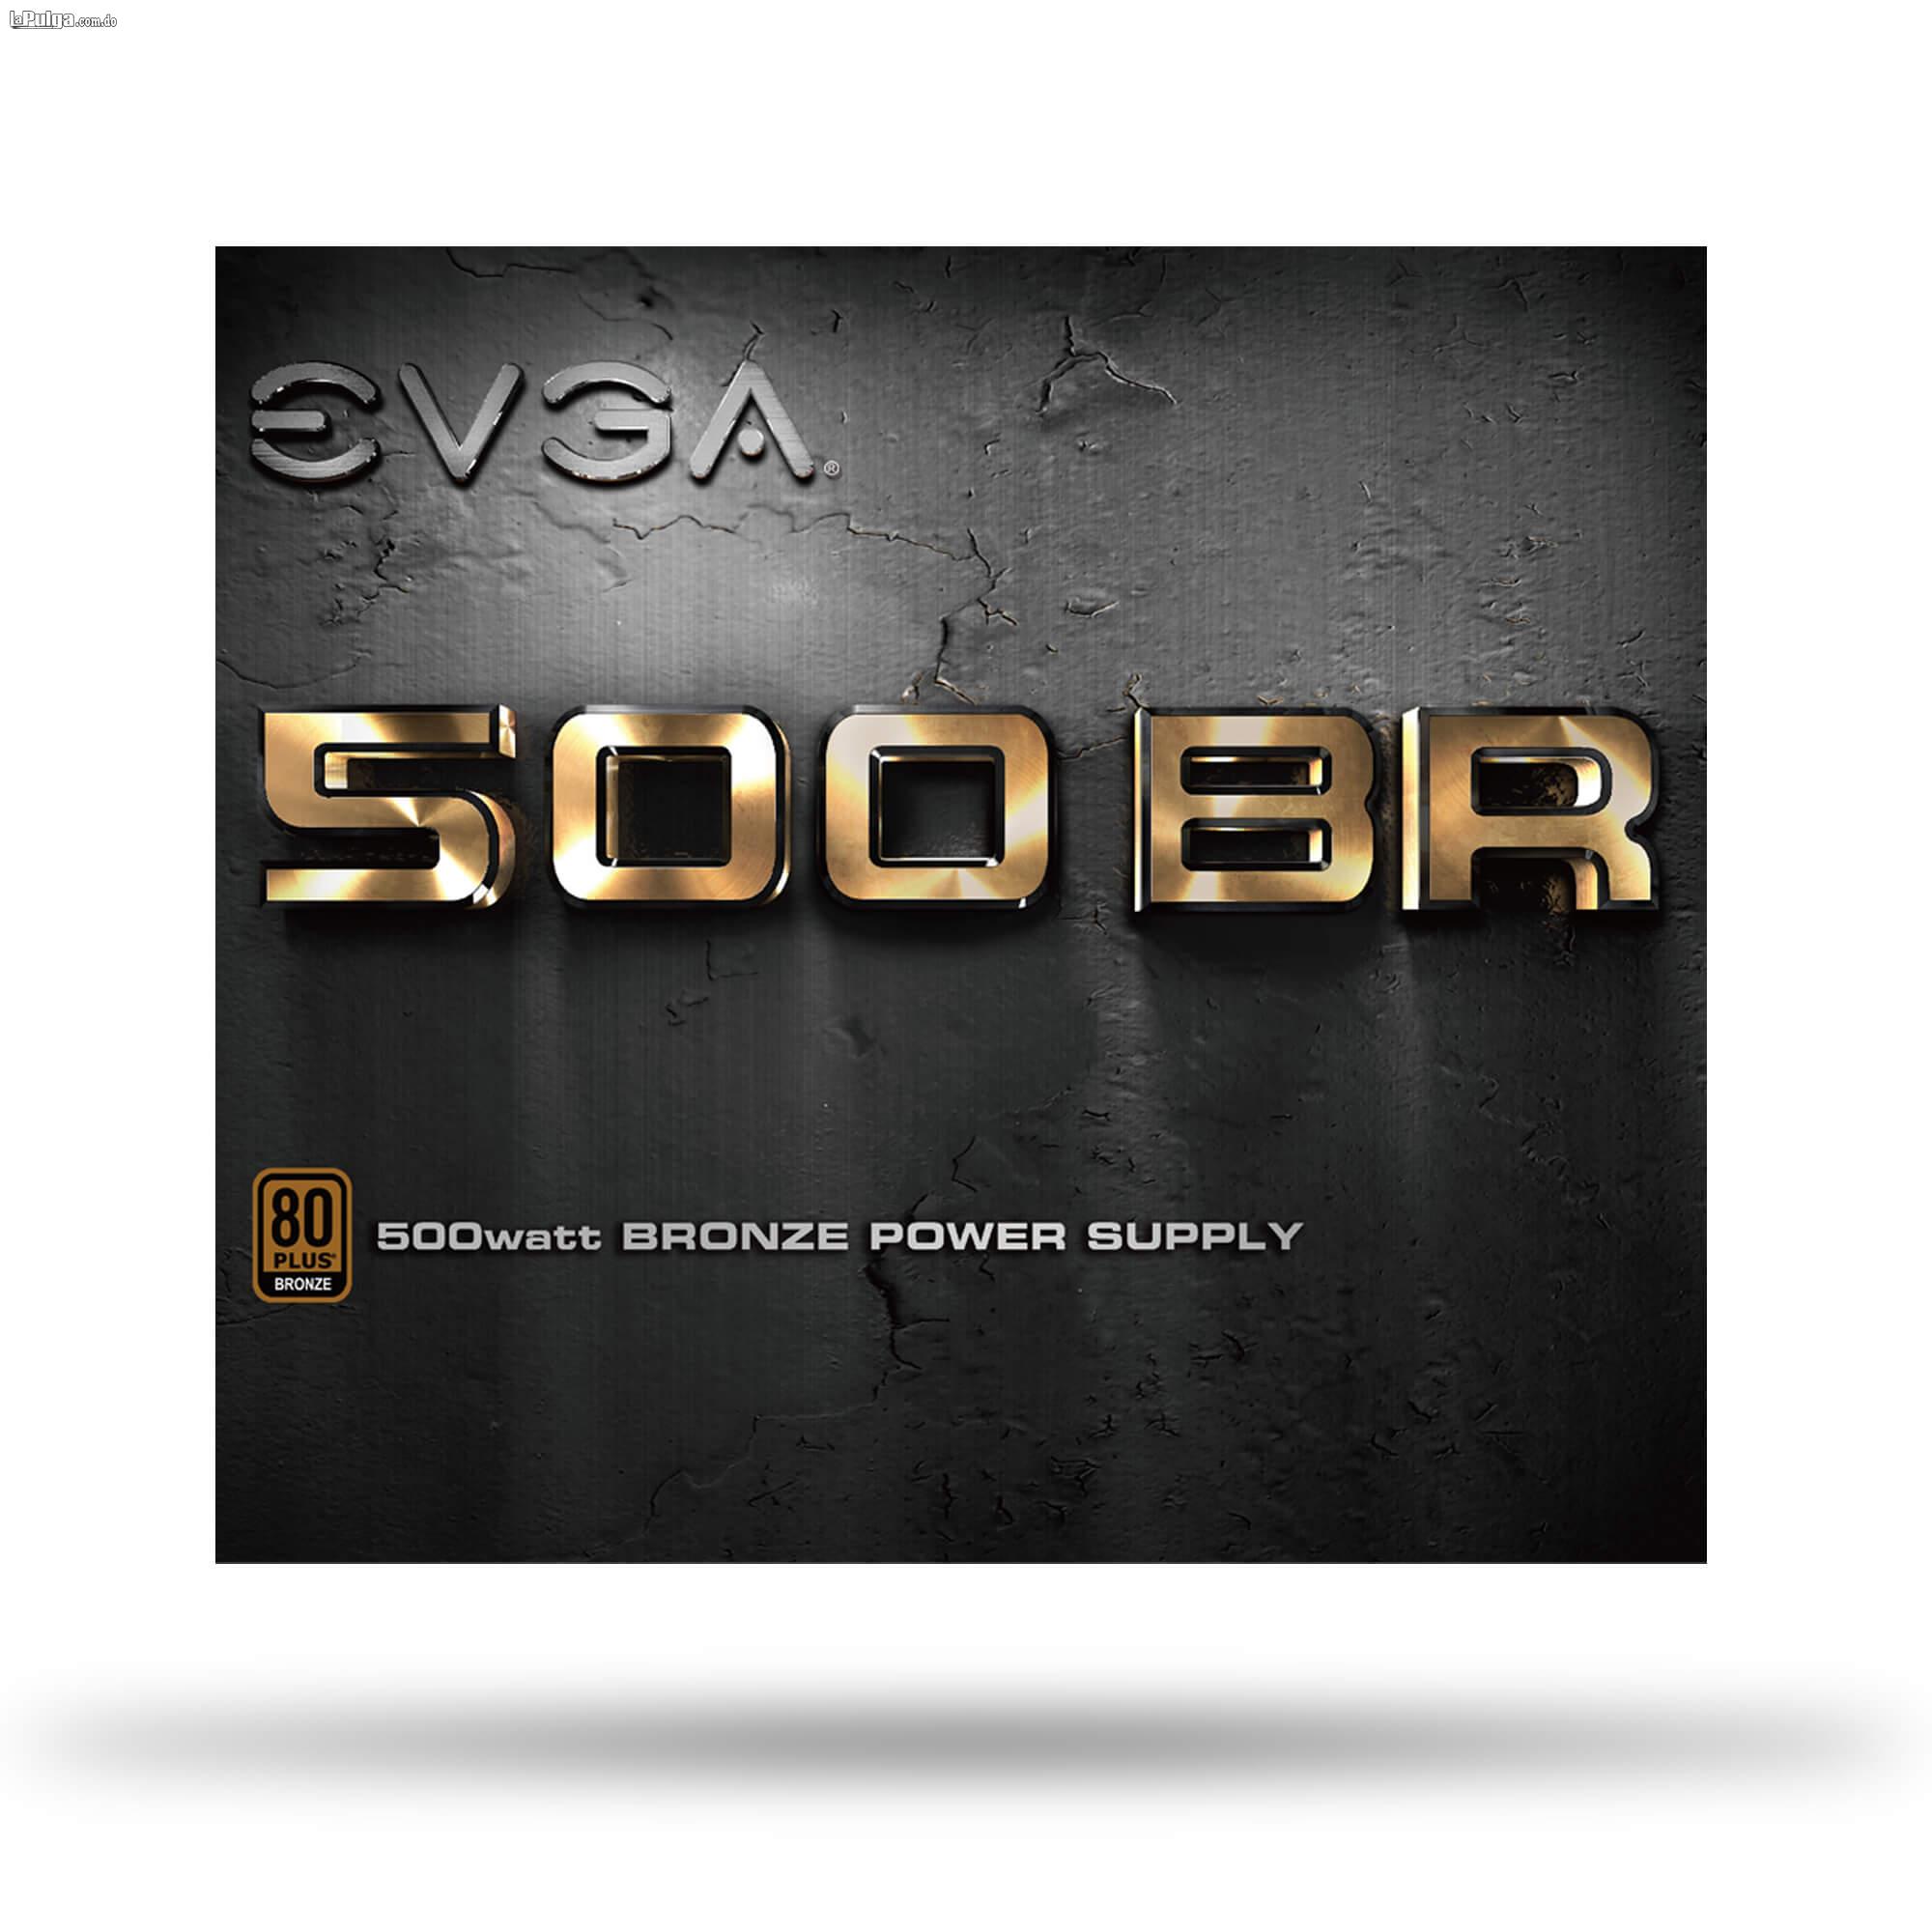 Power Supply Evga 100-BR-0500-K1 500W 80 BRONZE Gaming 100-240v Foto 7074860-1.jpg